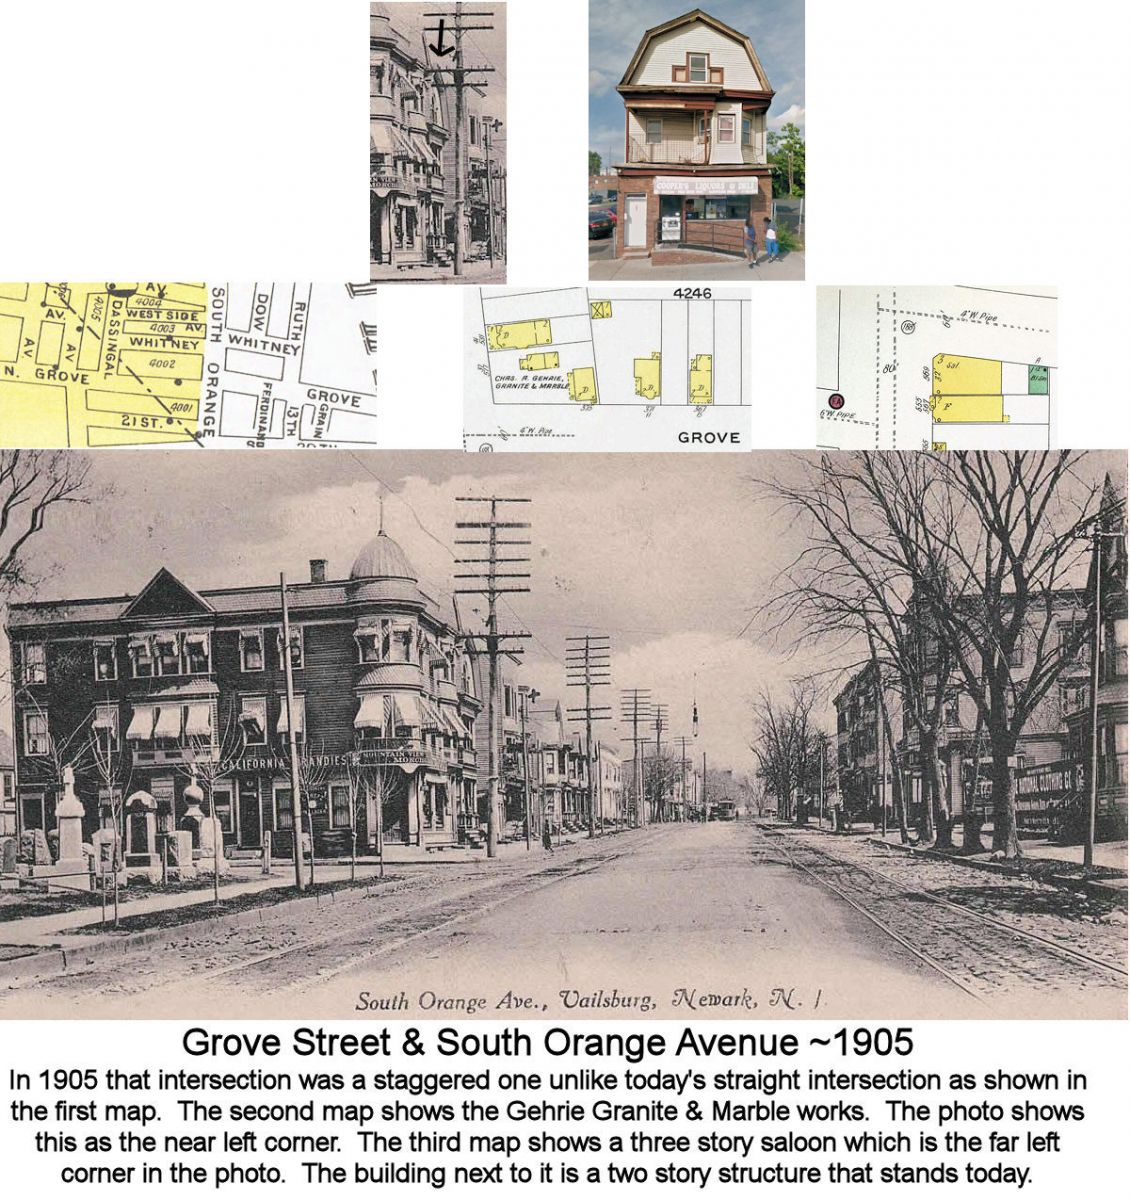 Grove Street & South Orange Avenue
Postcard
